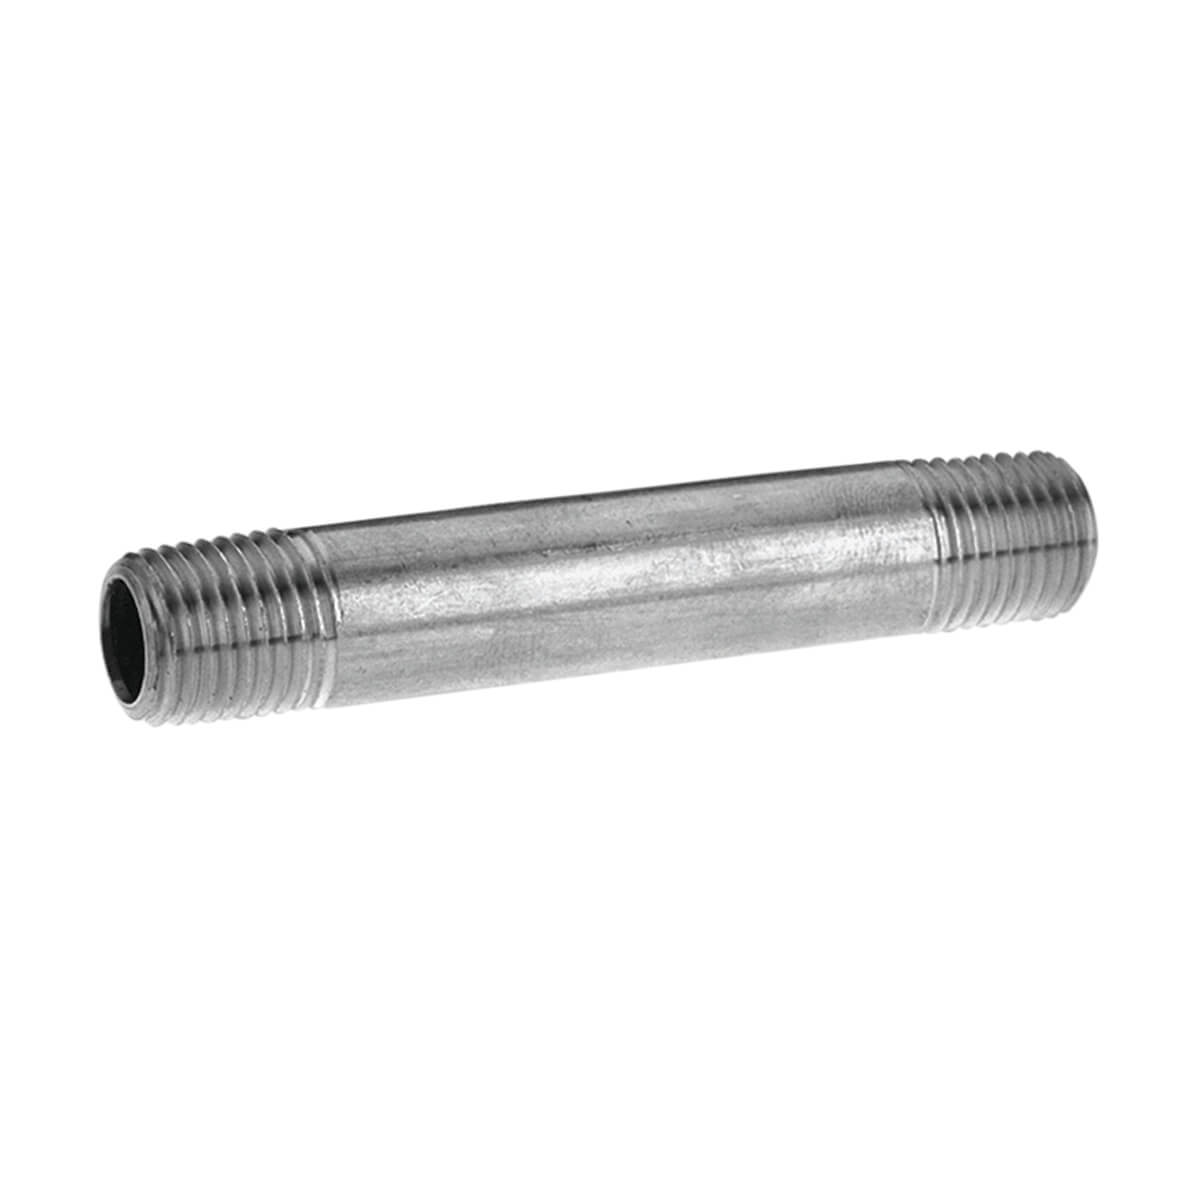 Pipe Nipple Galvanzied Steel - 1-1/4-in x 36-in